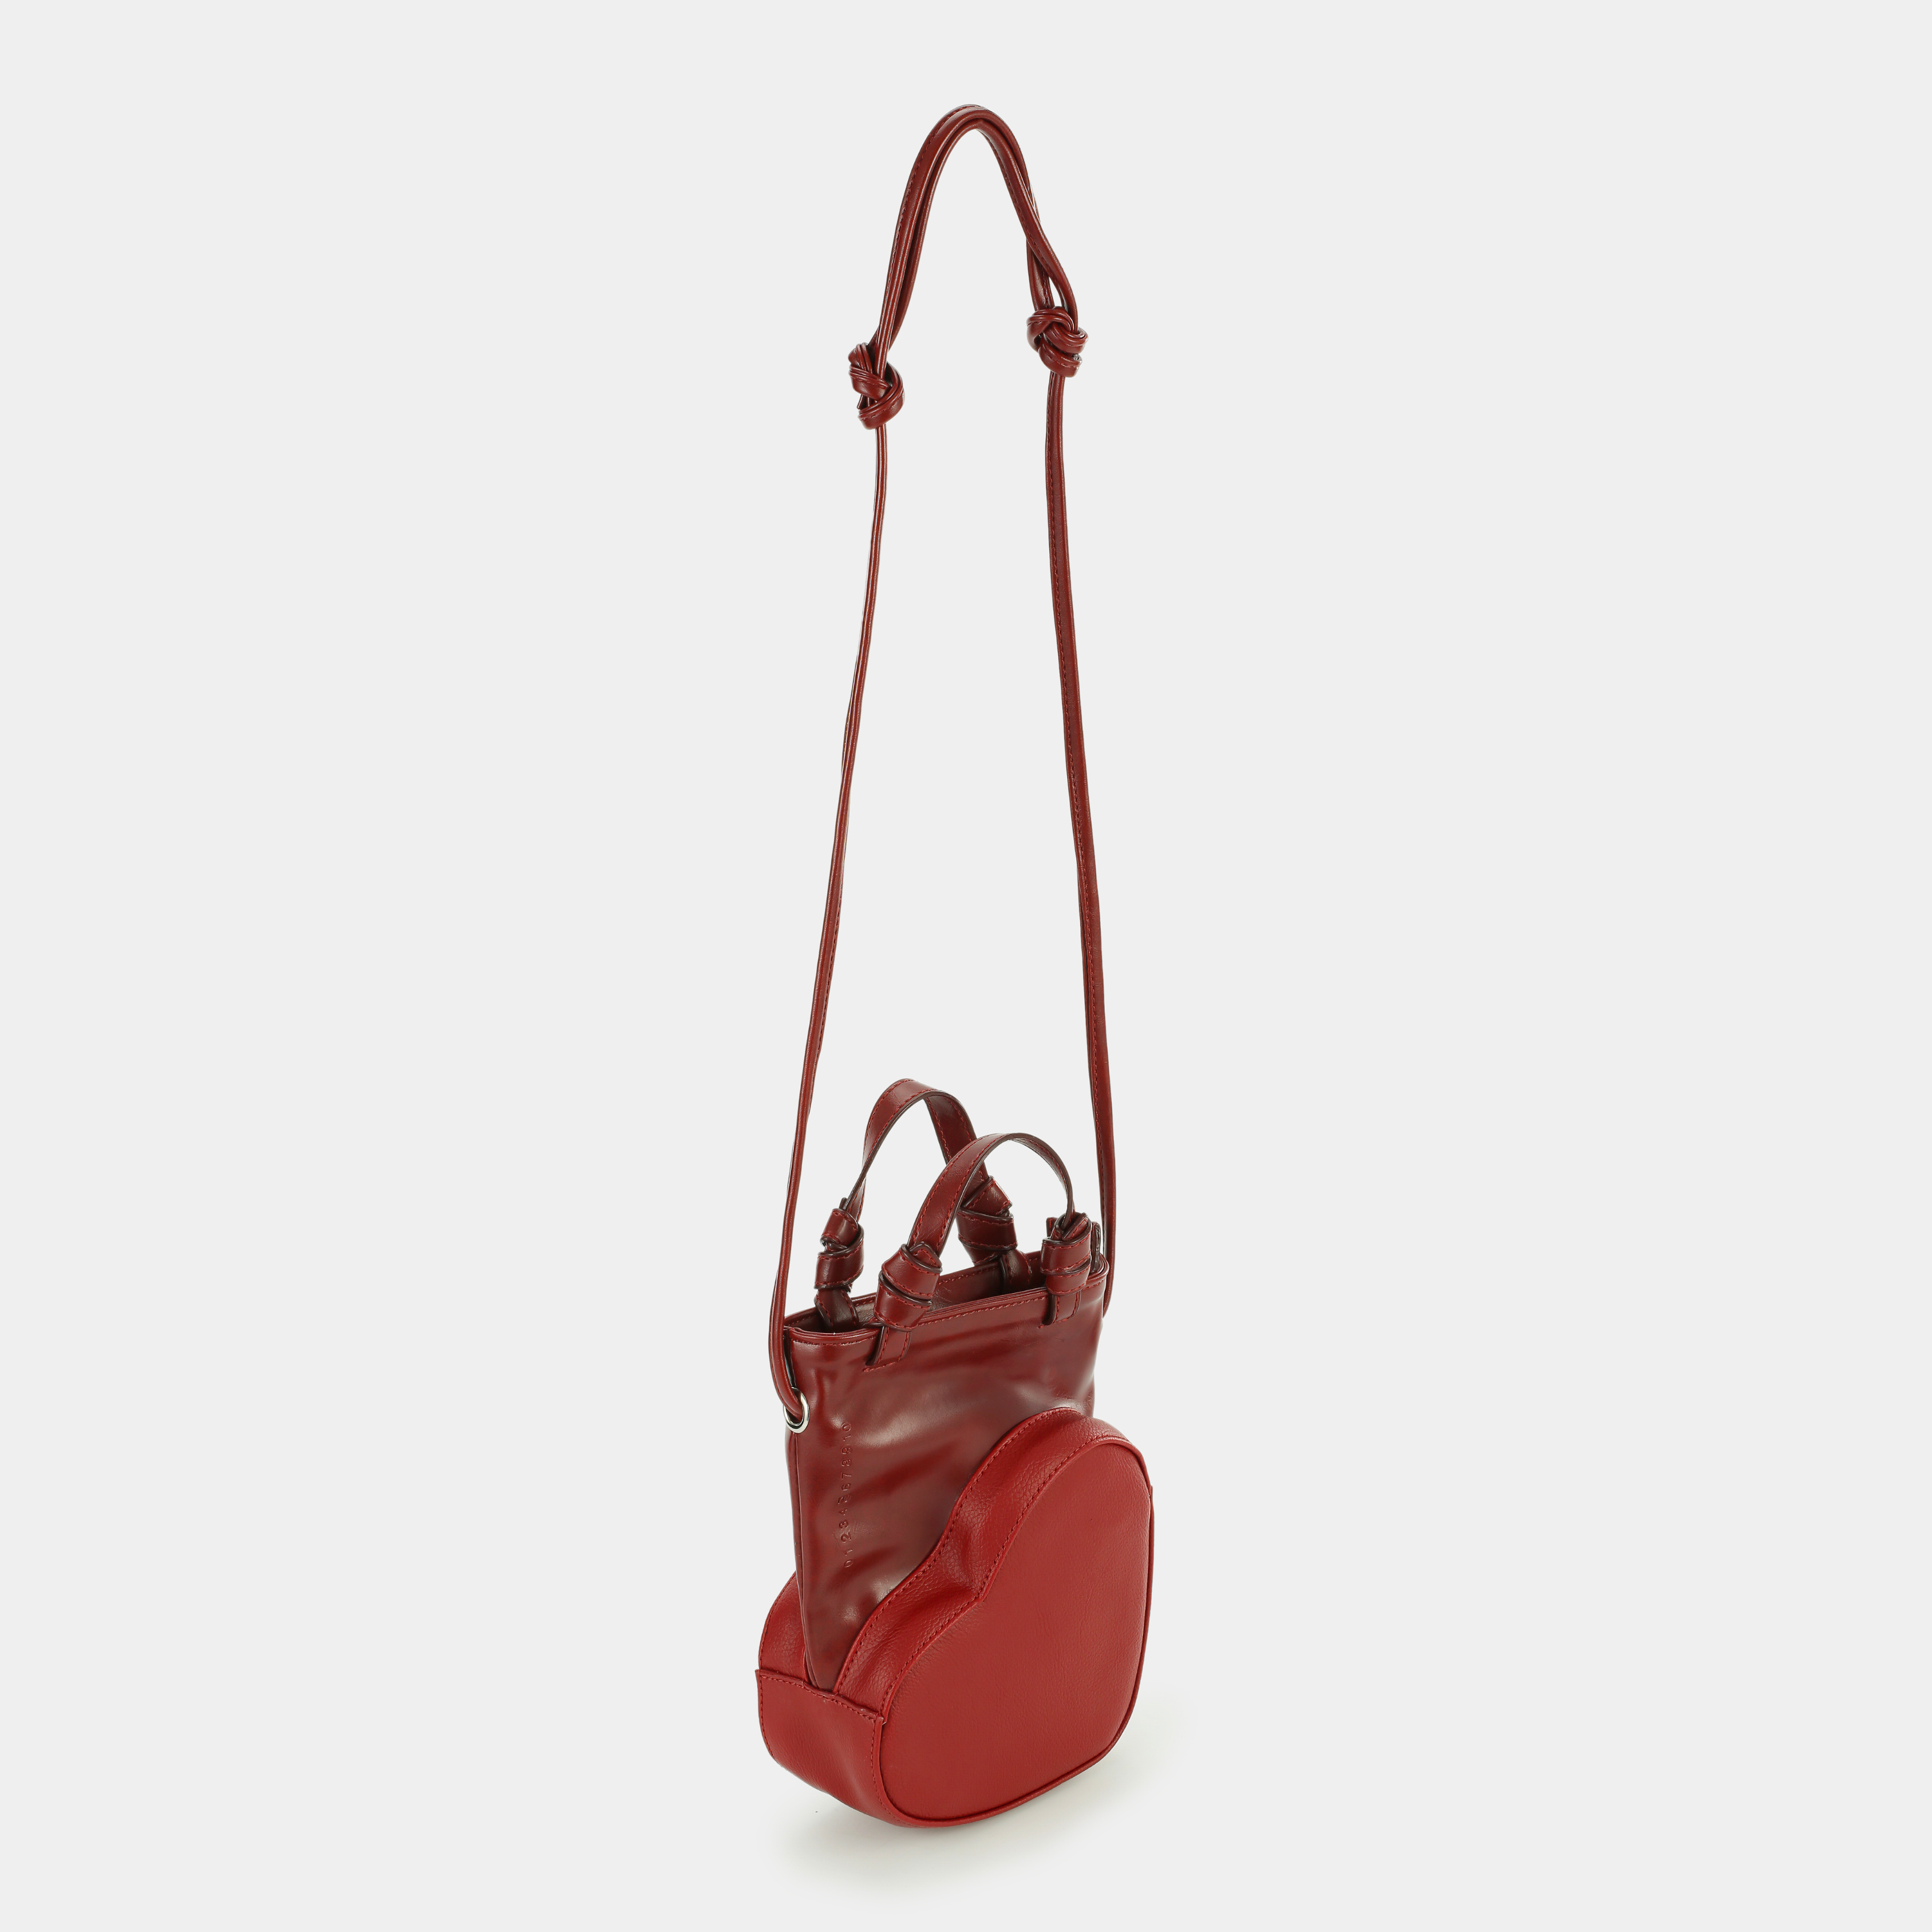 Growing Heart red handbag